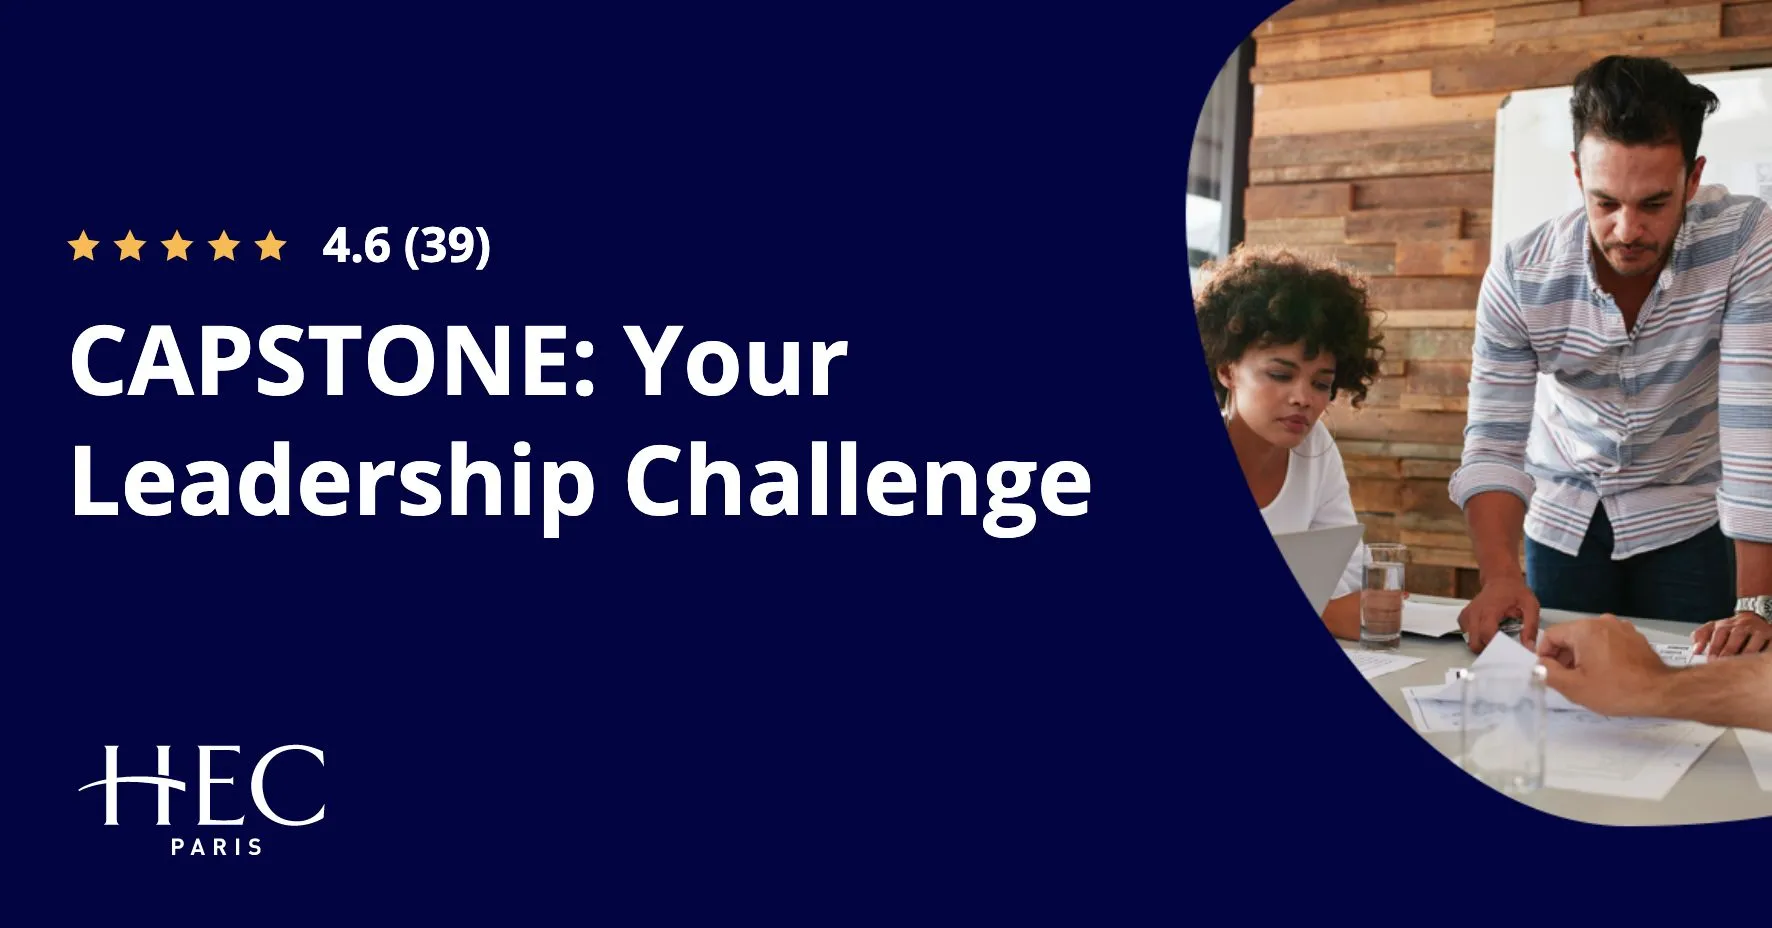 CAPSTONE: Your Leadership Challenge